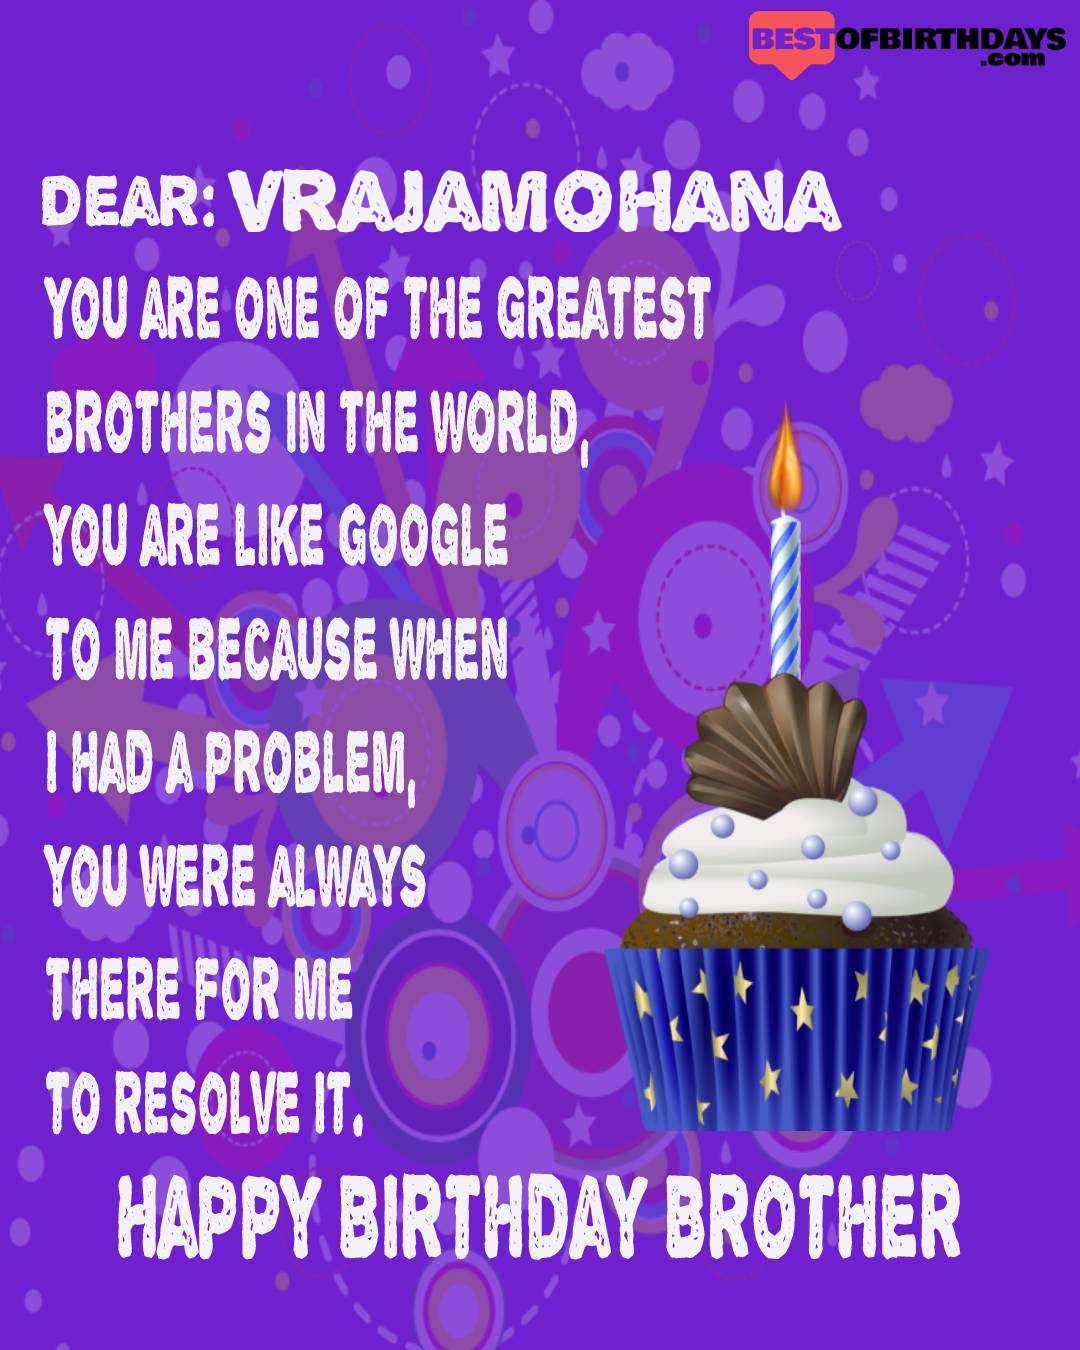 Happy birthday vrajamohana bhai brother bro